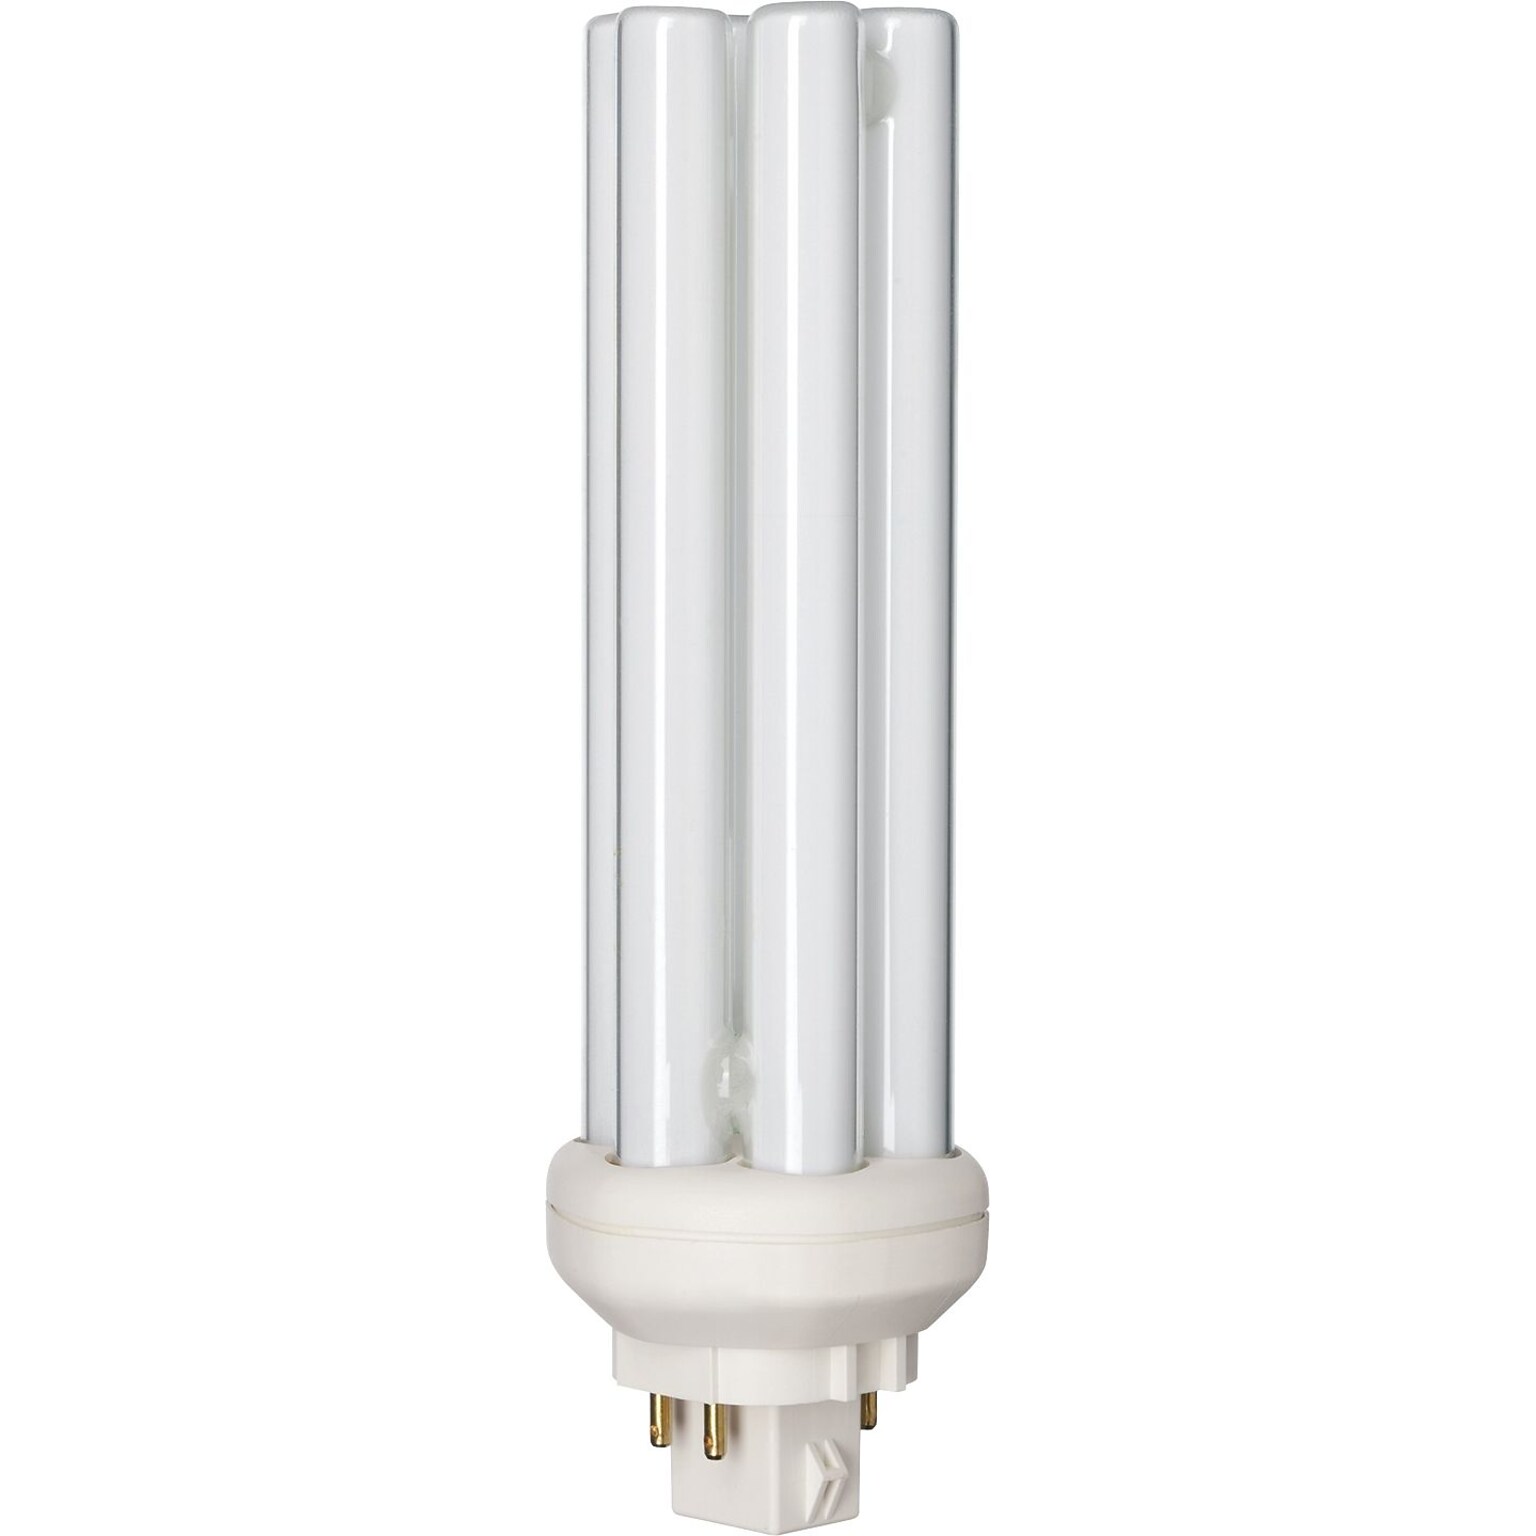 Philips Compact Fluorescent PL-T Lamp, 26 Watts, 4-Pin, Warm White, 10/Carton (458240)